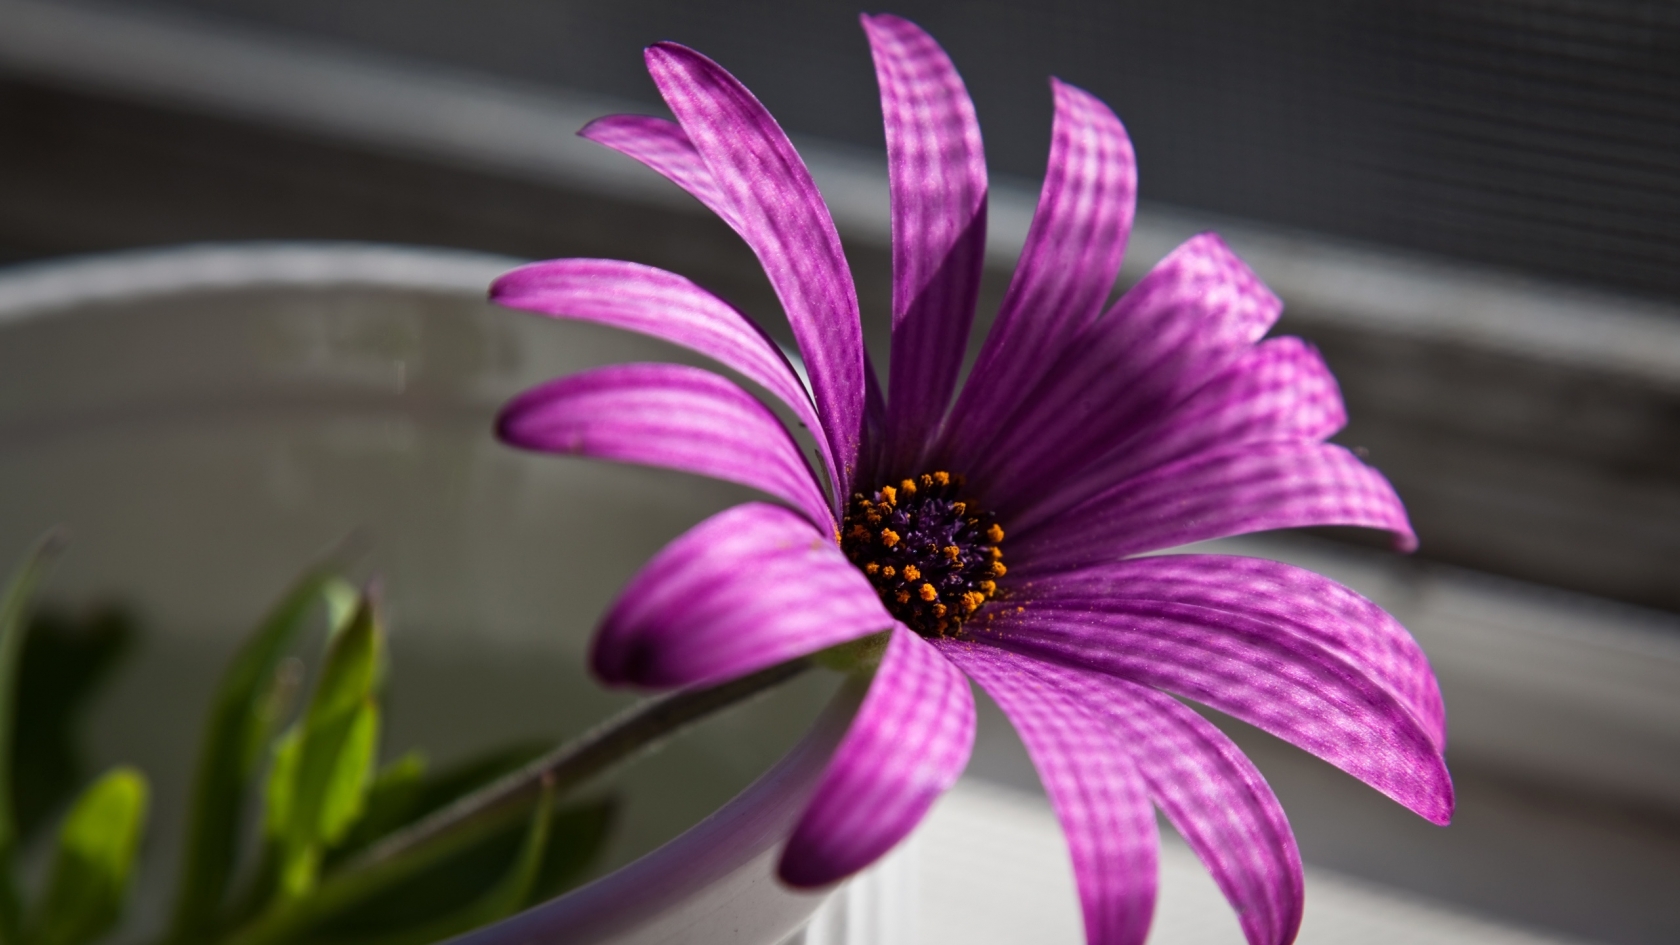 Superb Purple Flower for 1680 x 945 HDTV resolution